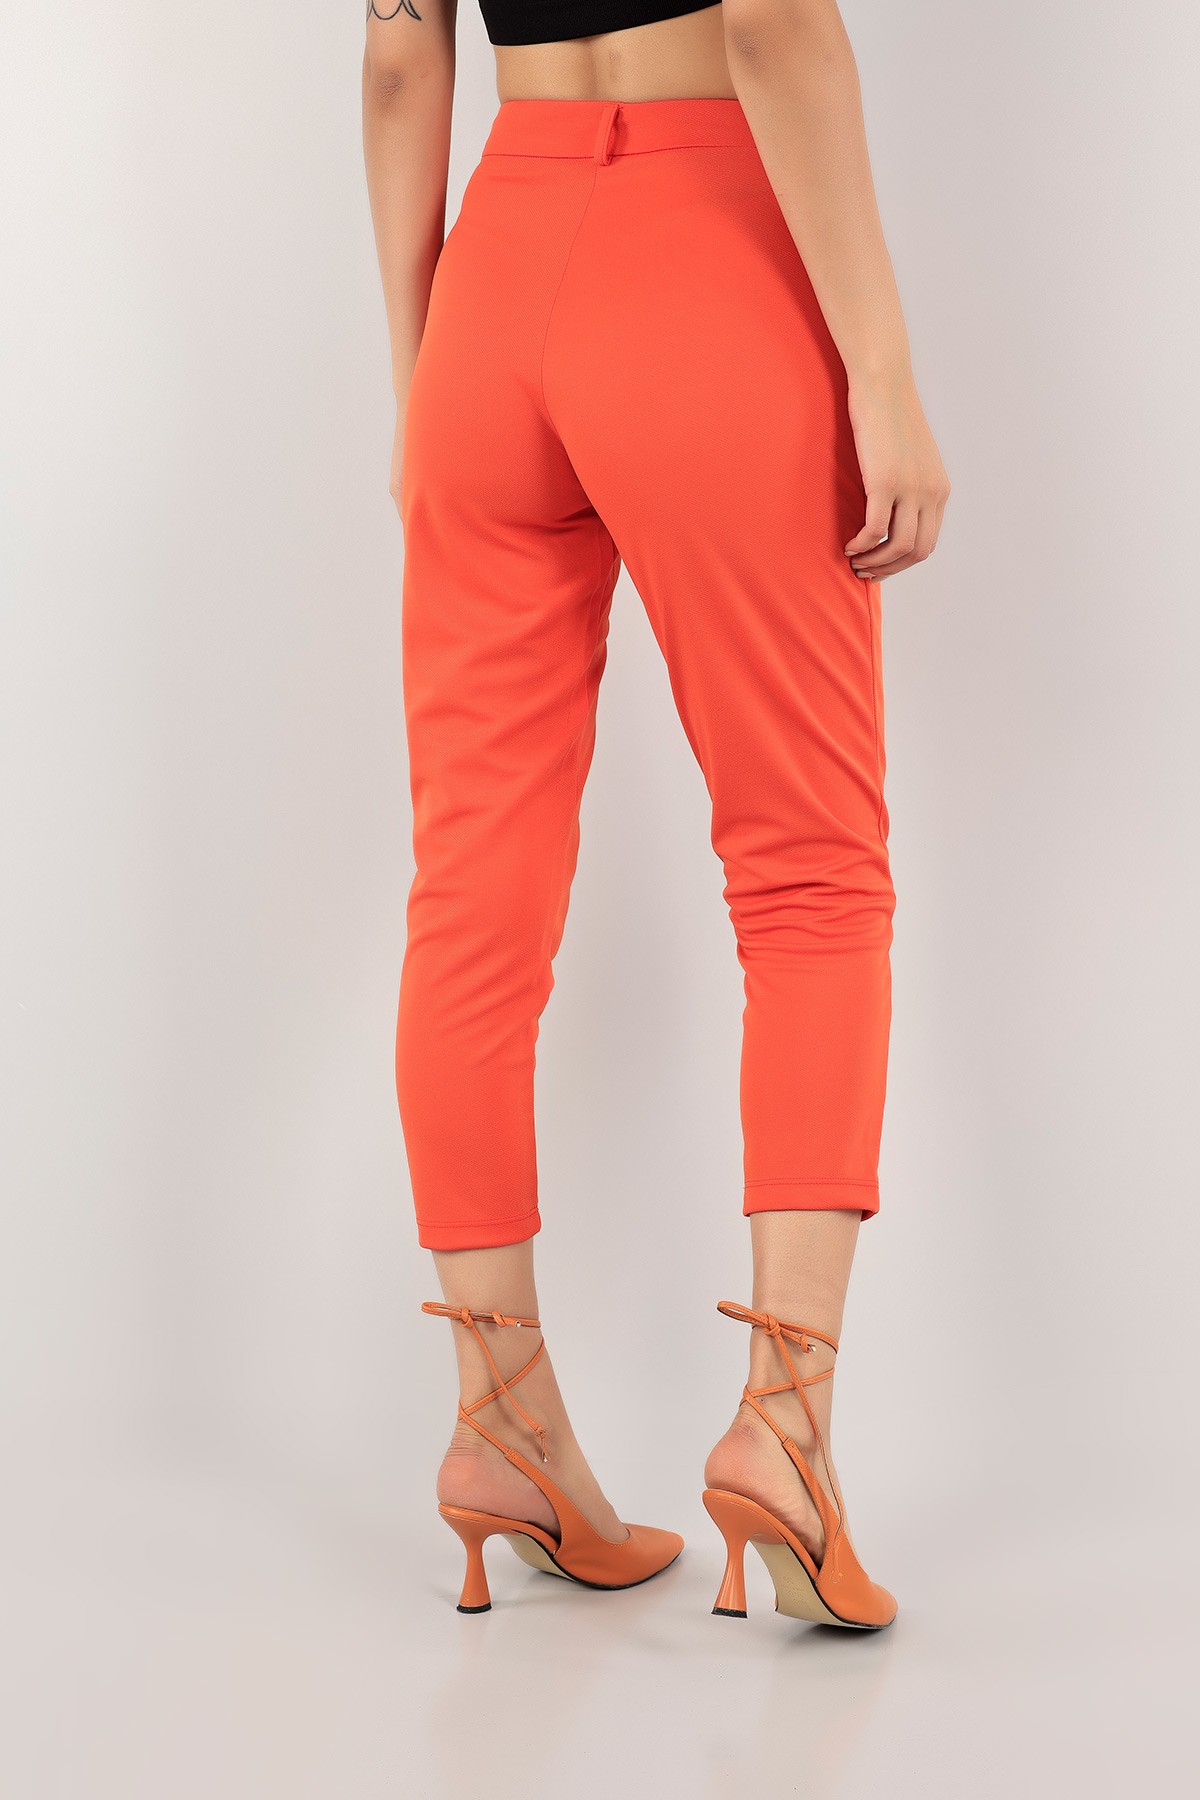 Formal orange pants